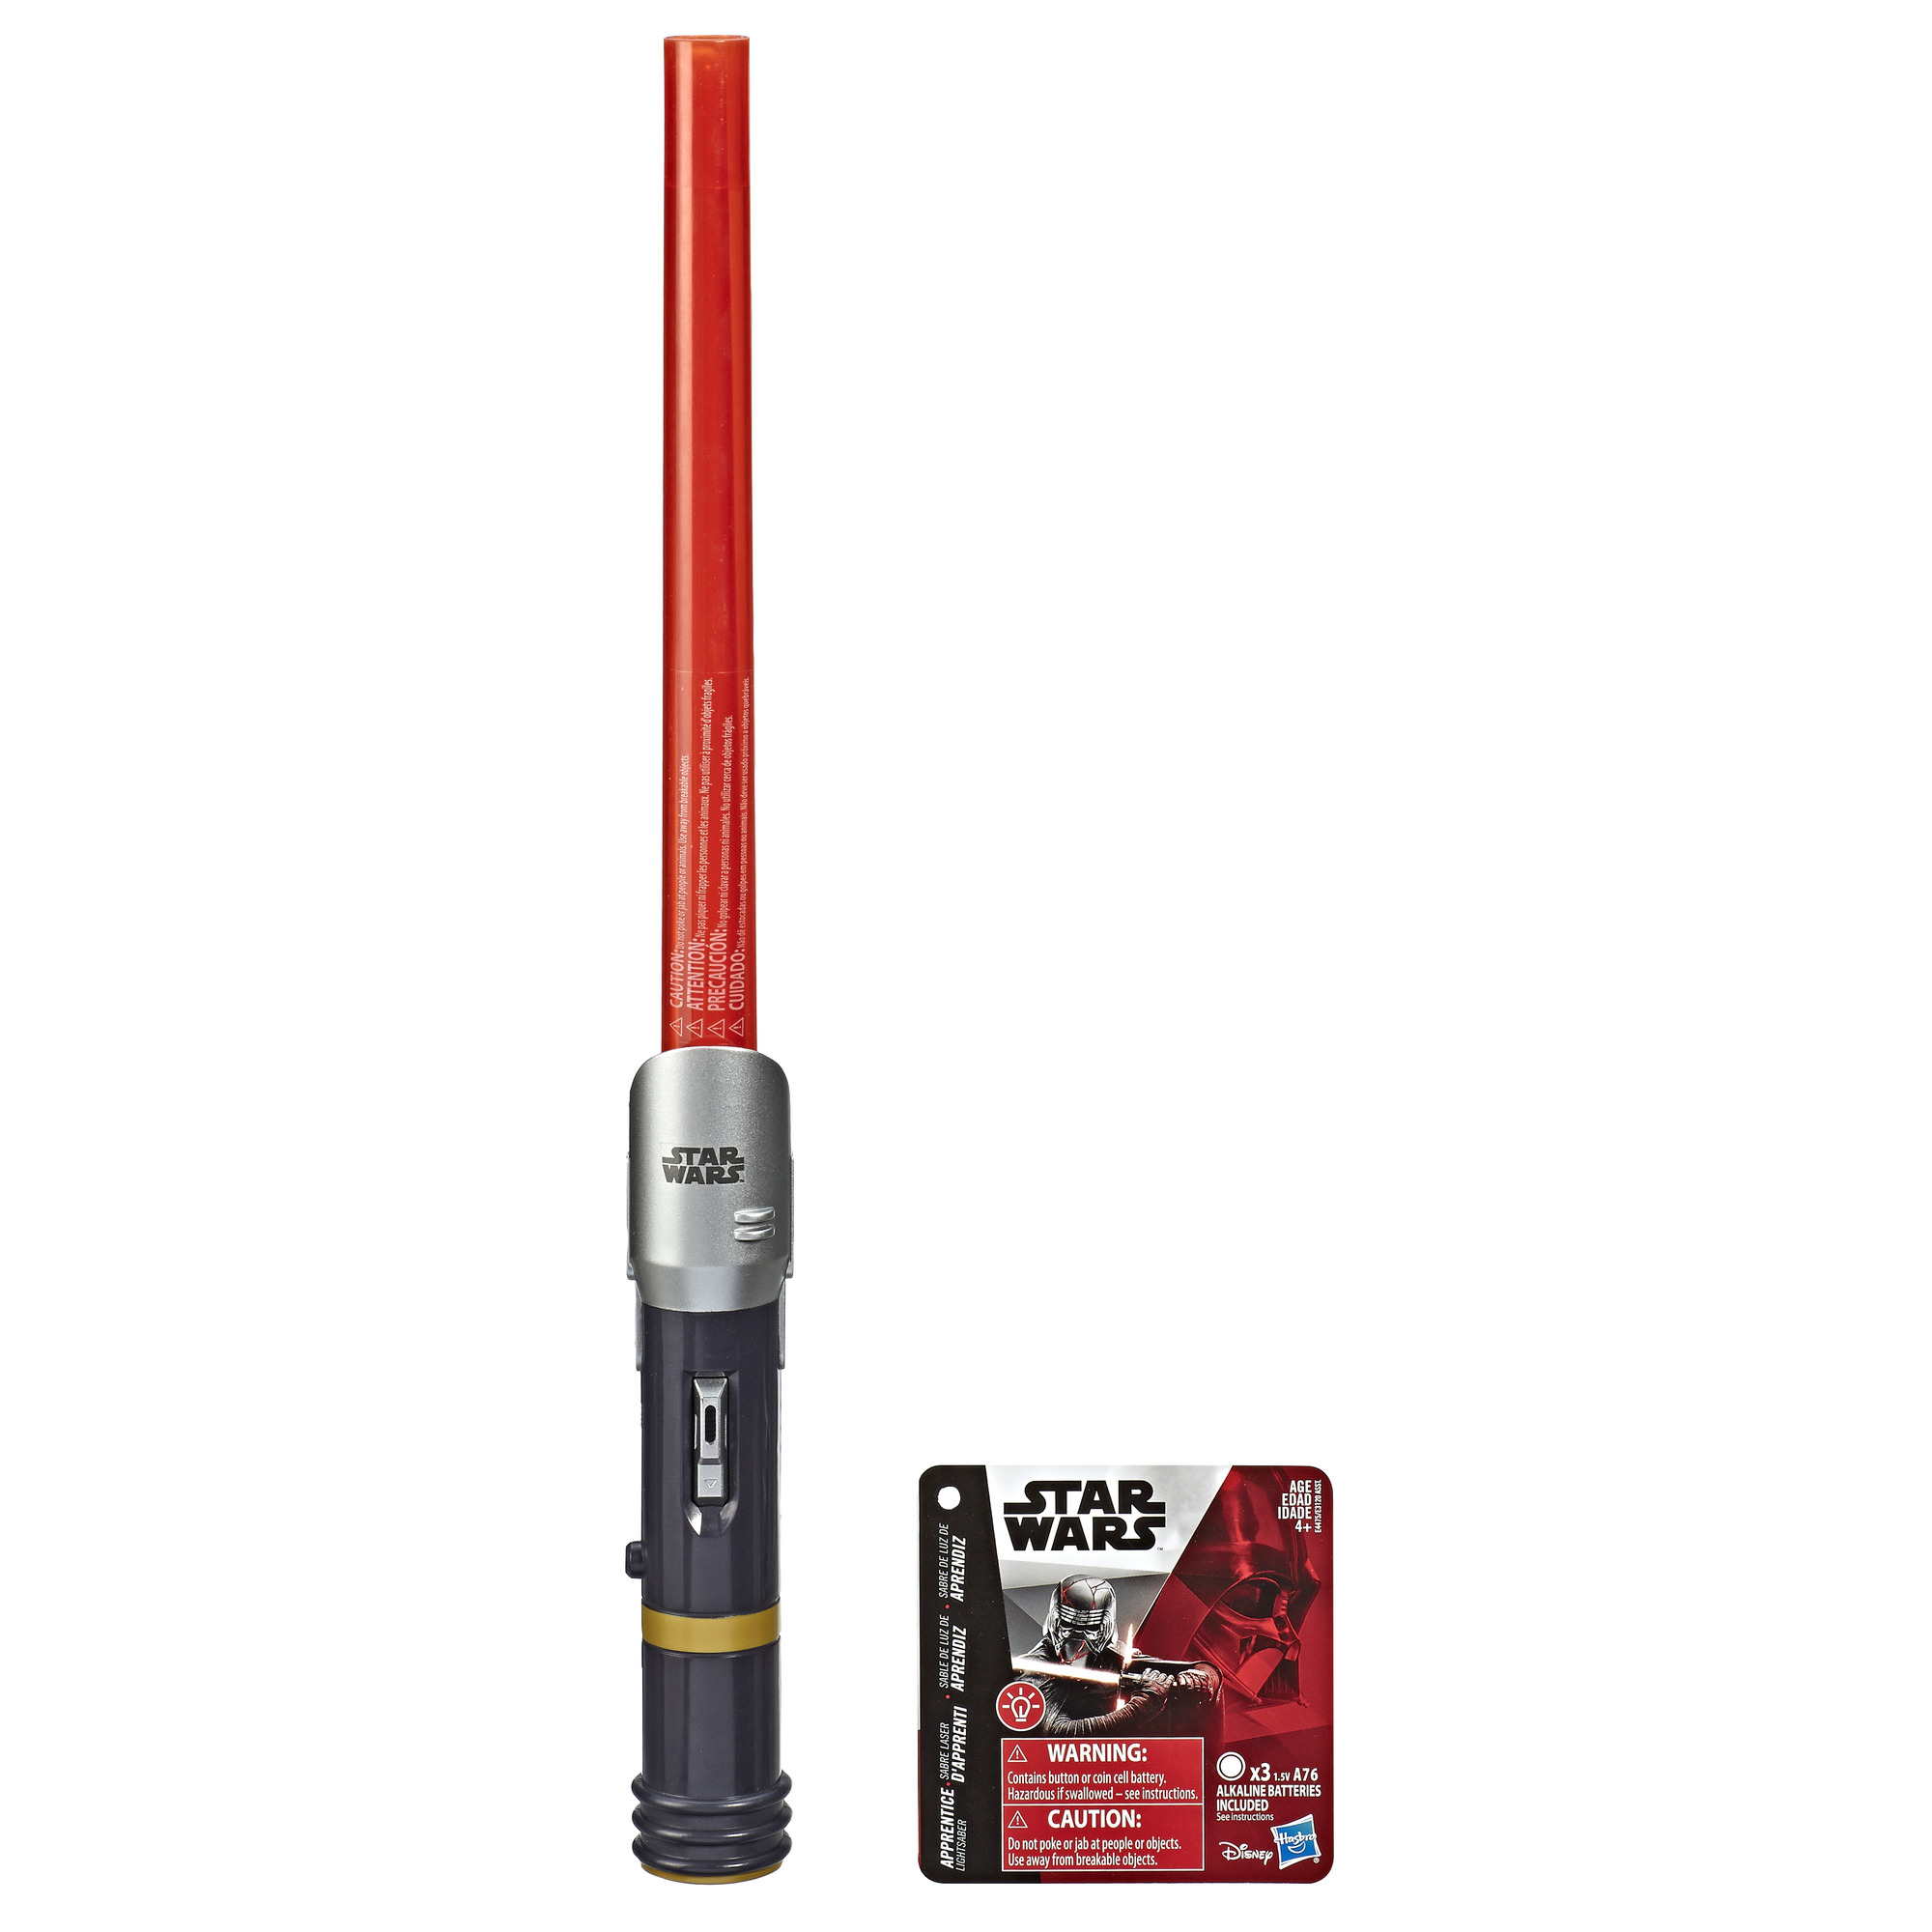 TROS Jedi Apprentice Red Lightsaber Toy 1